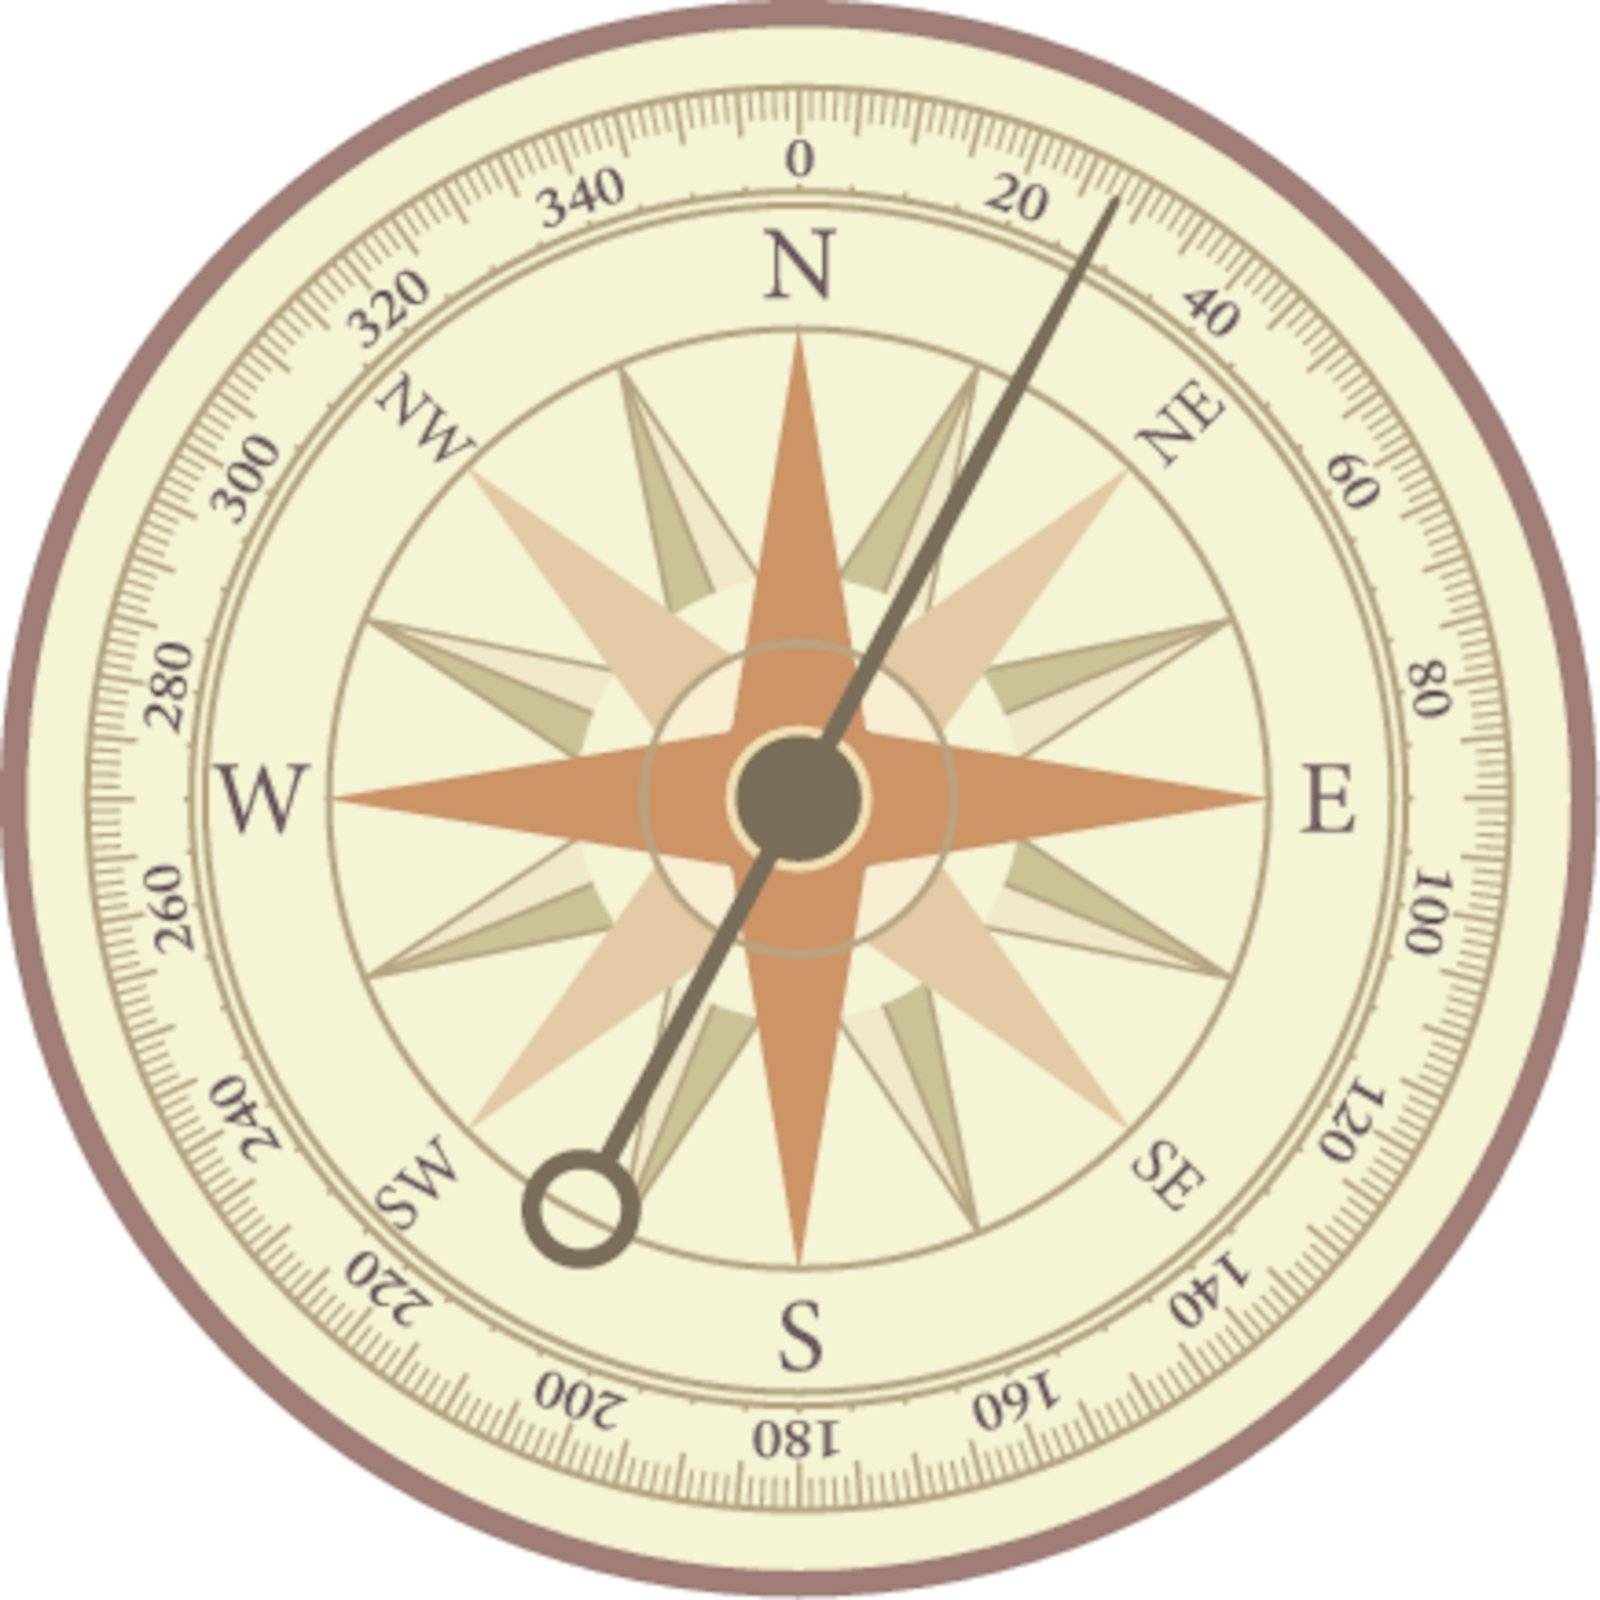 Sea compass by vtorous